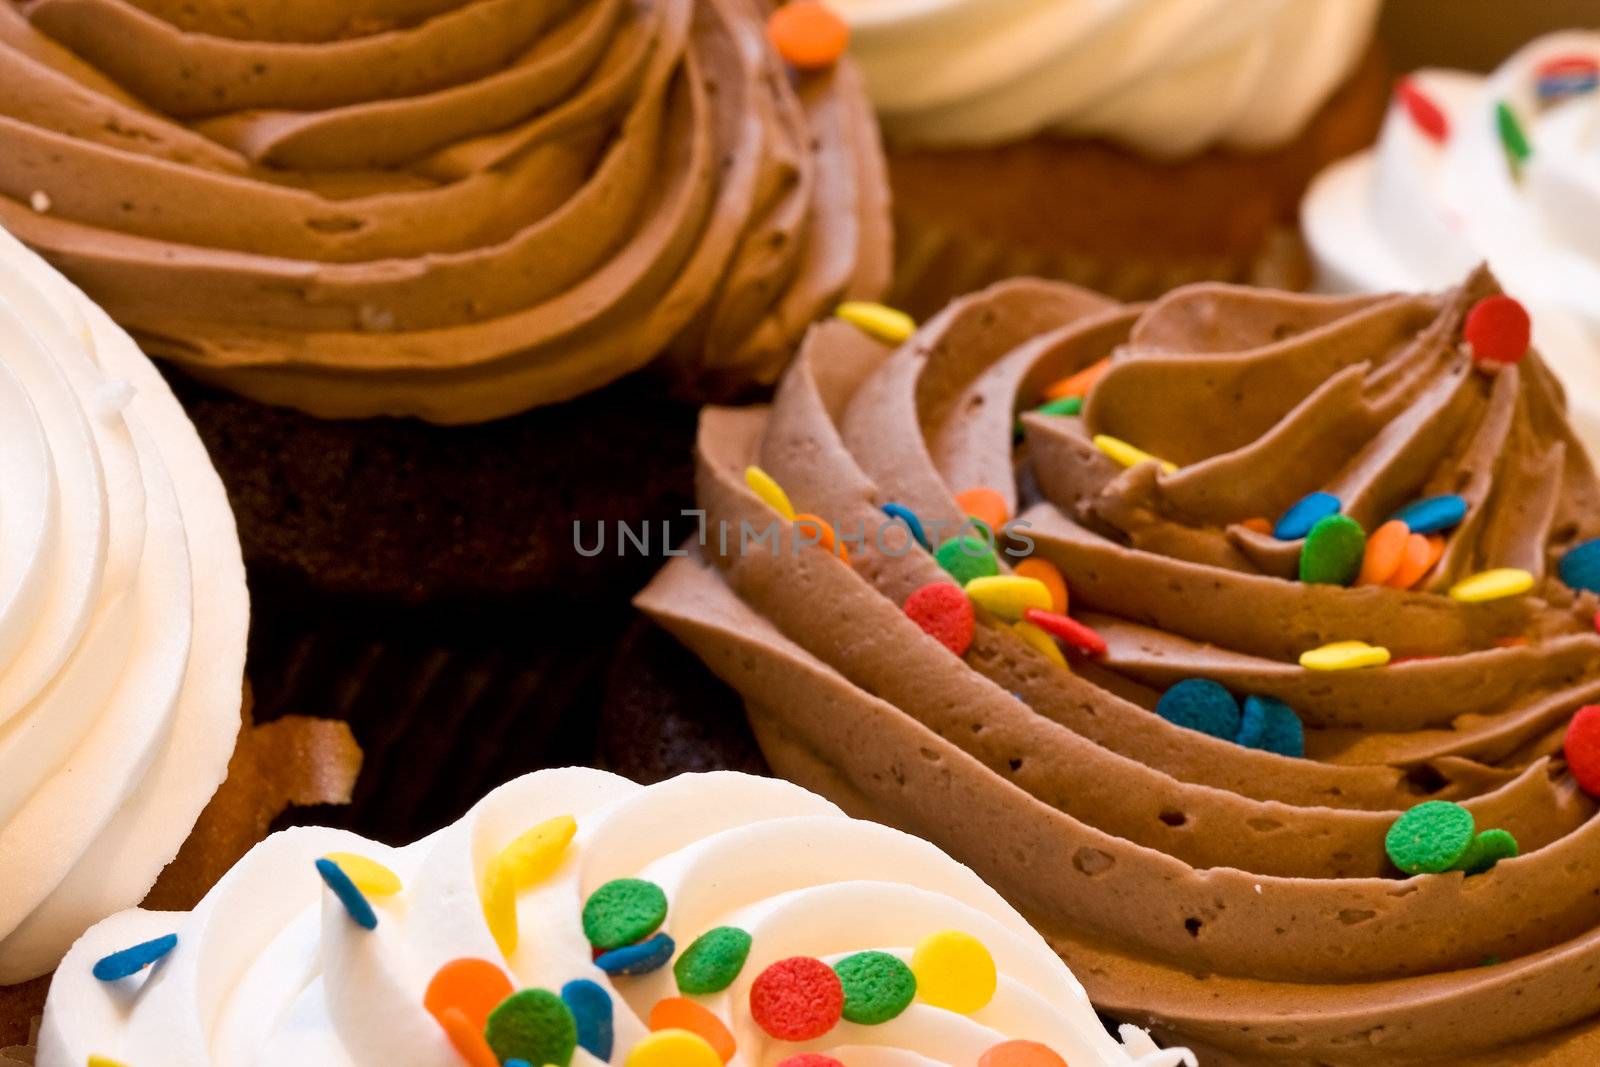 cupcakes by snokid